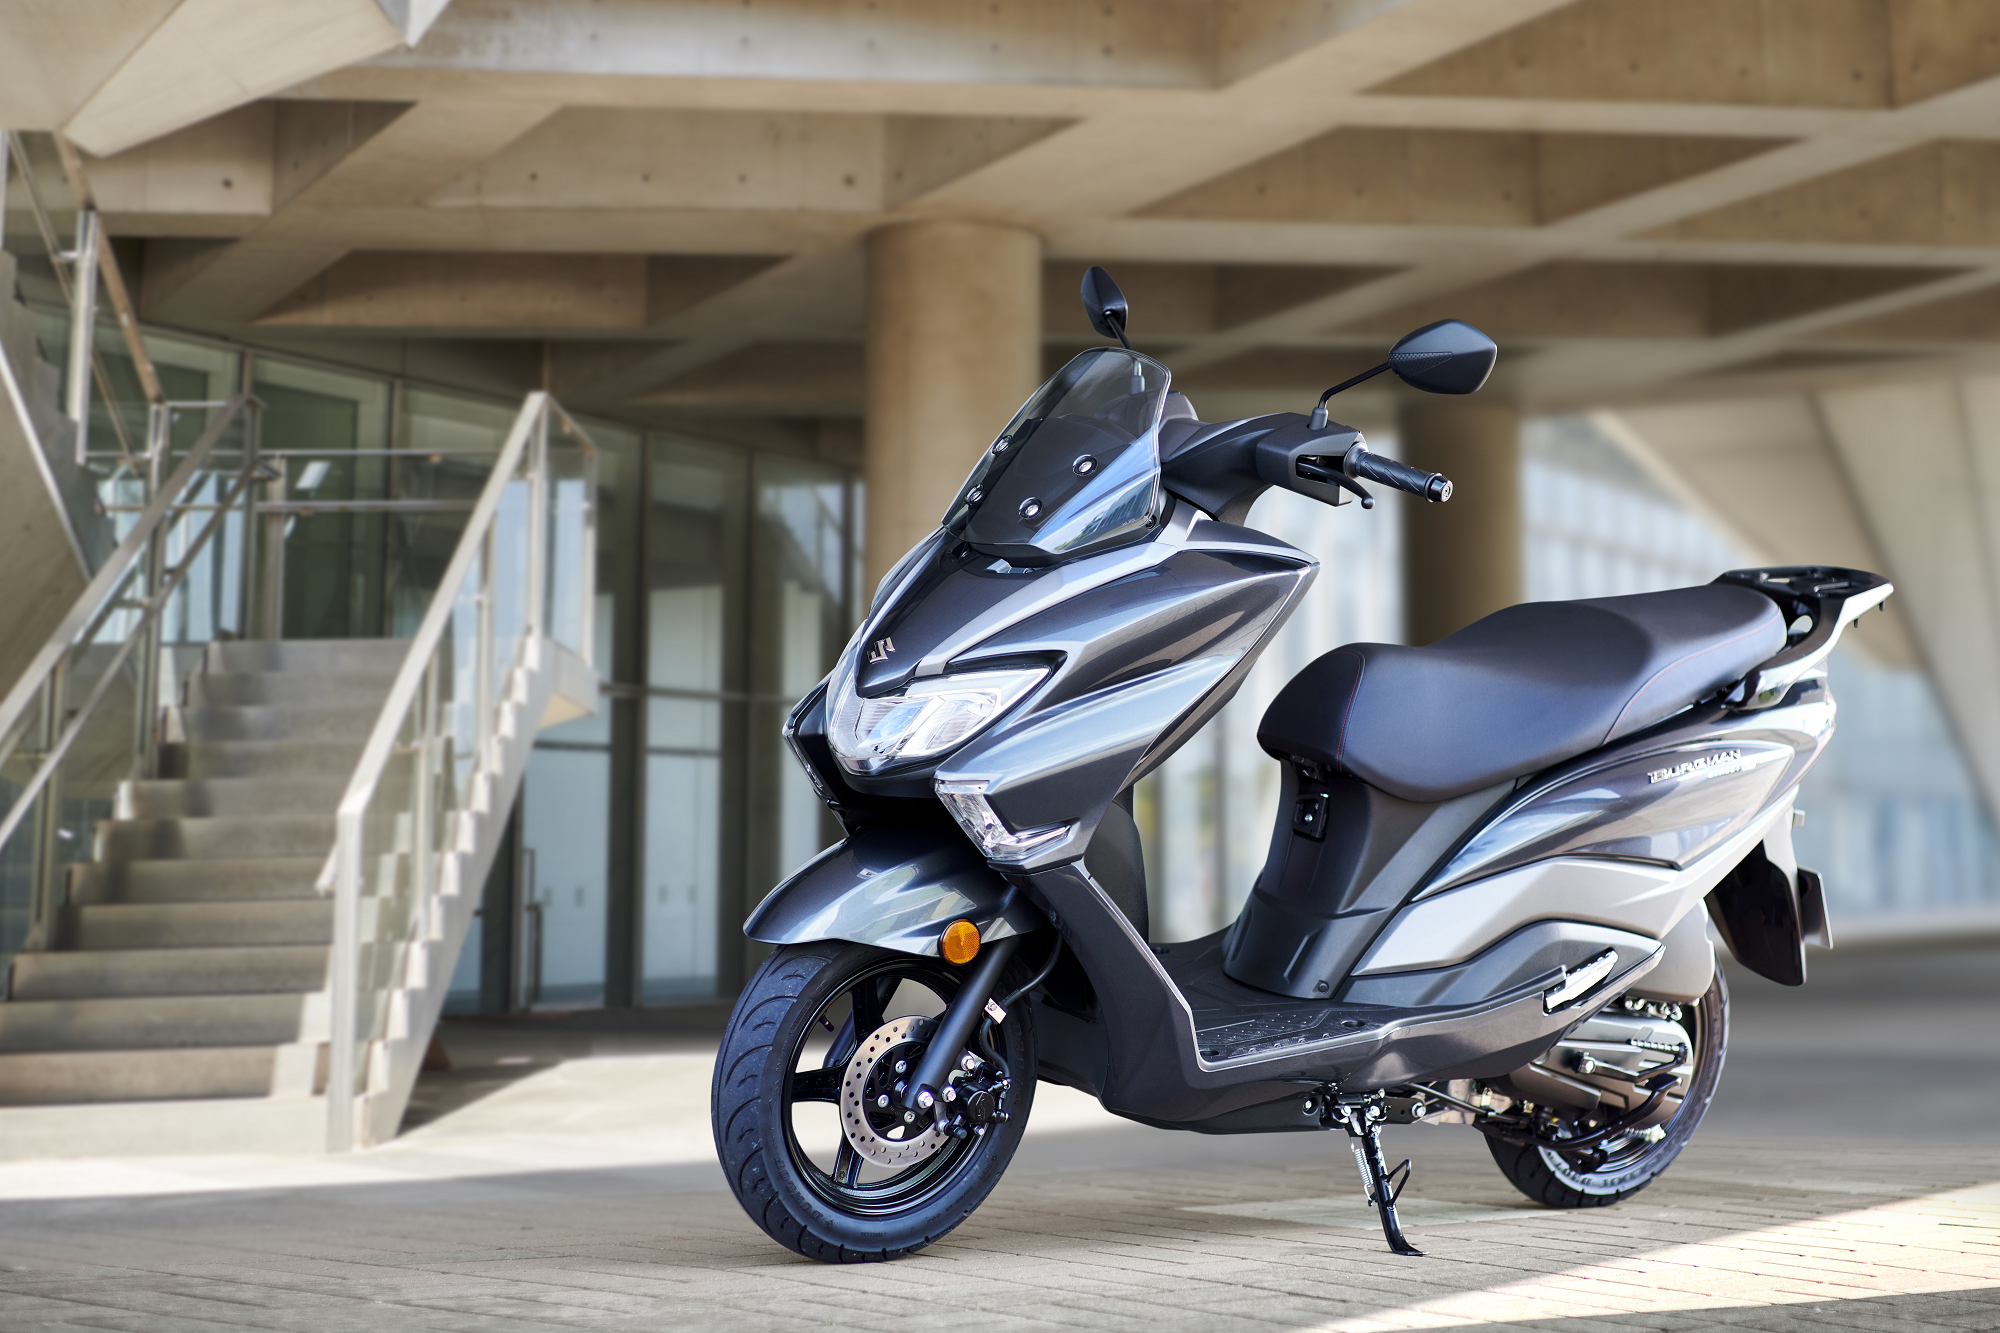 Suzuki reveals 2023 Burgman Street 125EX scooter at Int